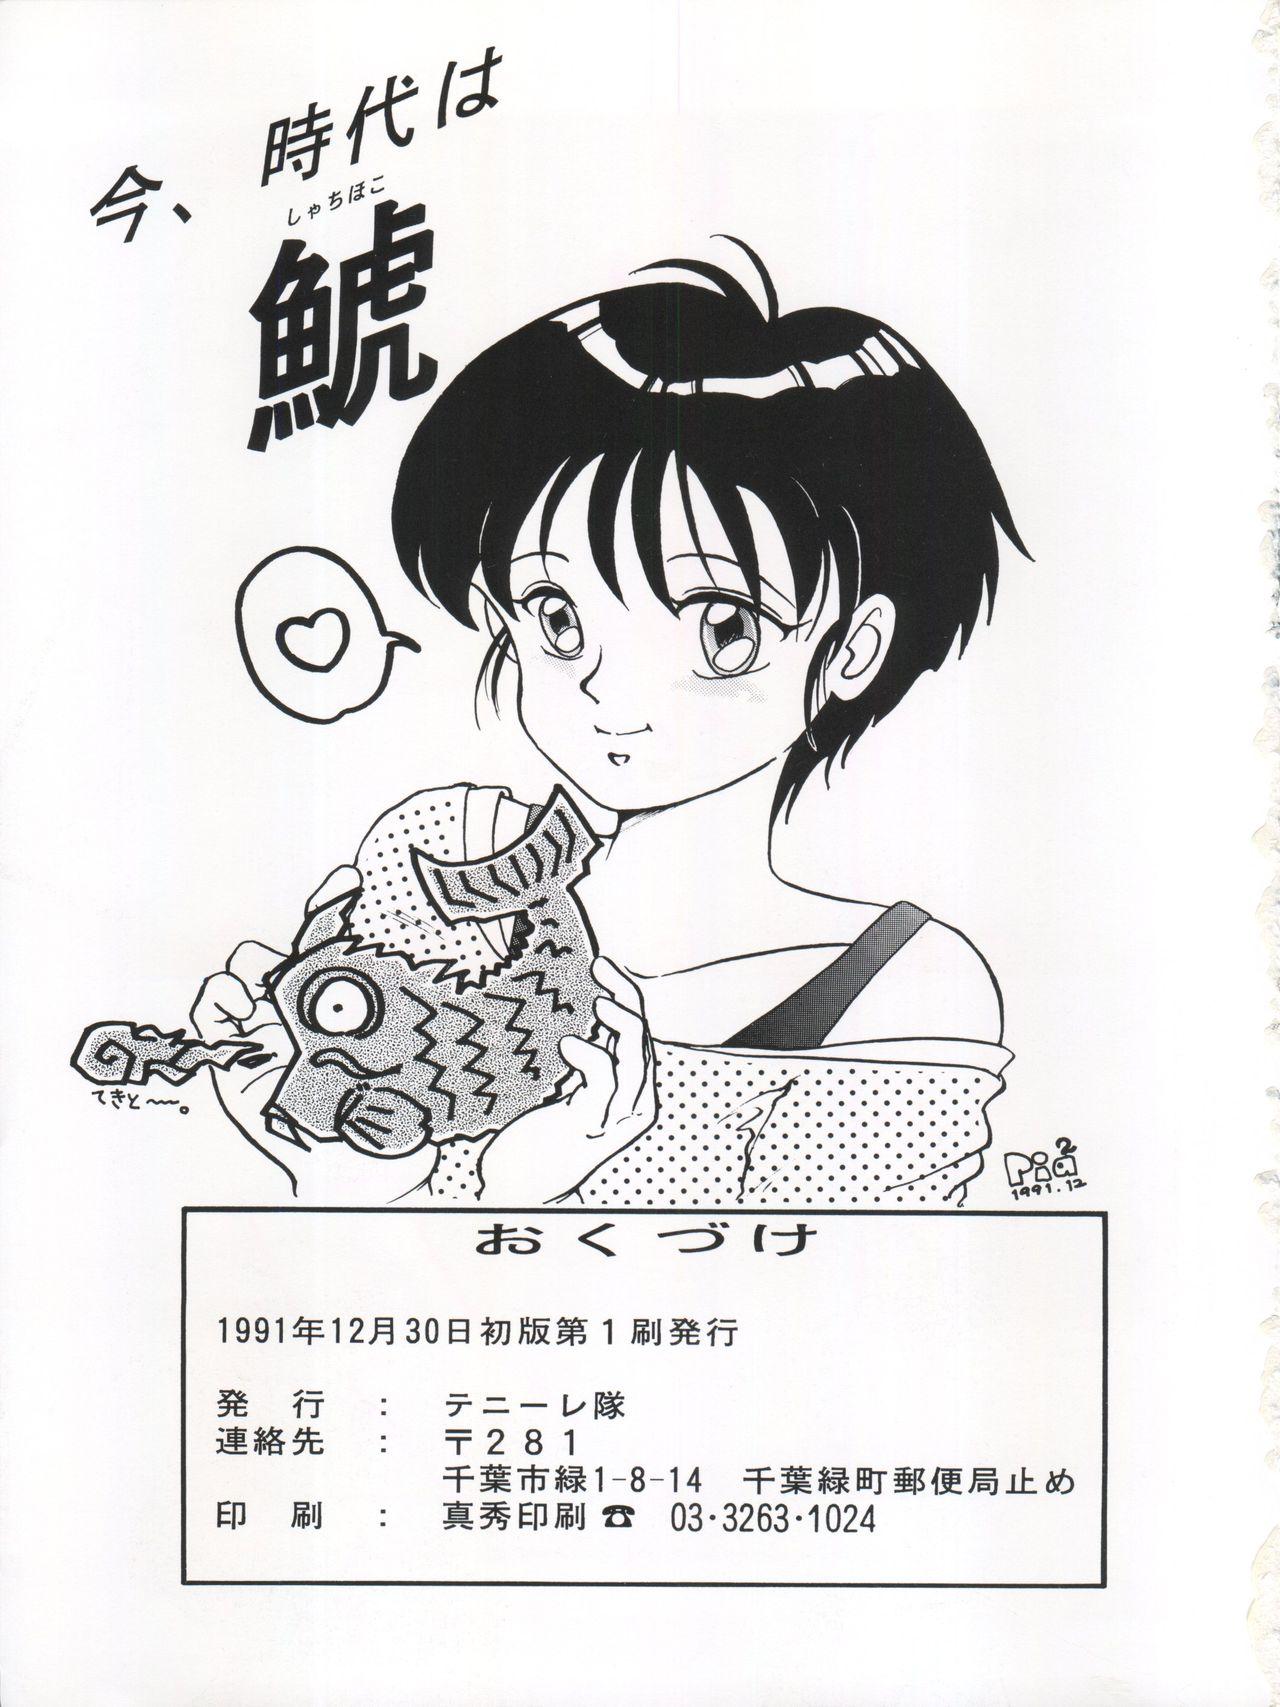 Blow Job Contest 逮捕されちゃうぞ - Fushigi no umi no nadia Youre under arrest Minky momo 3x3 eyes Handsome - Page 47